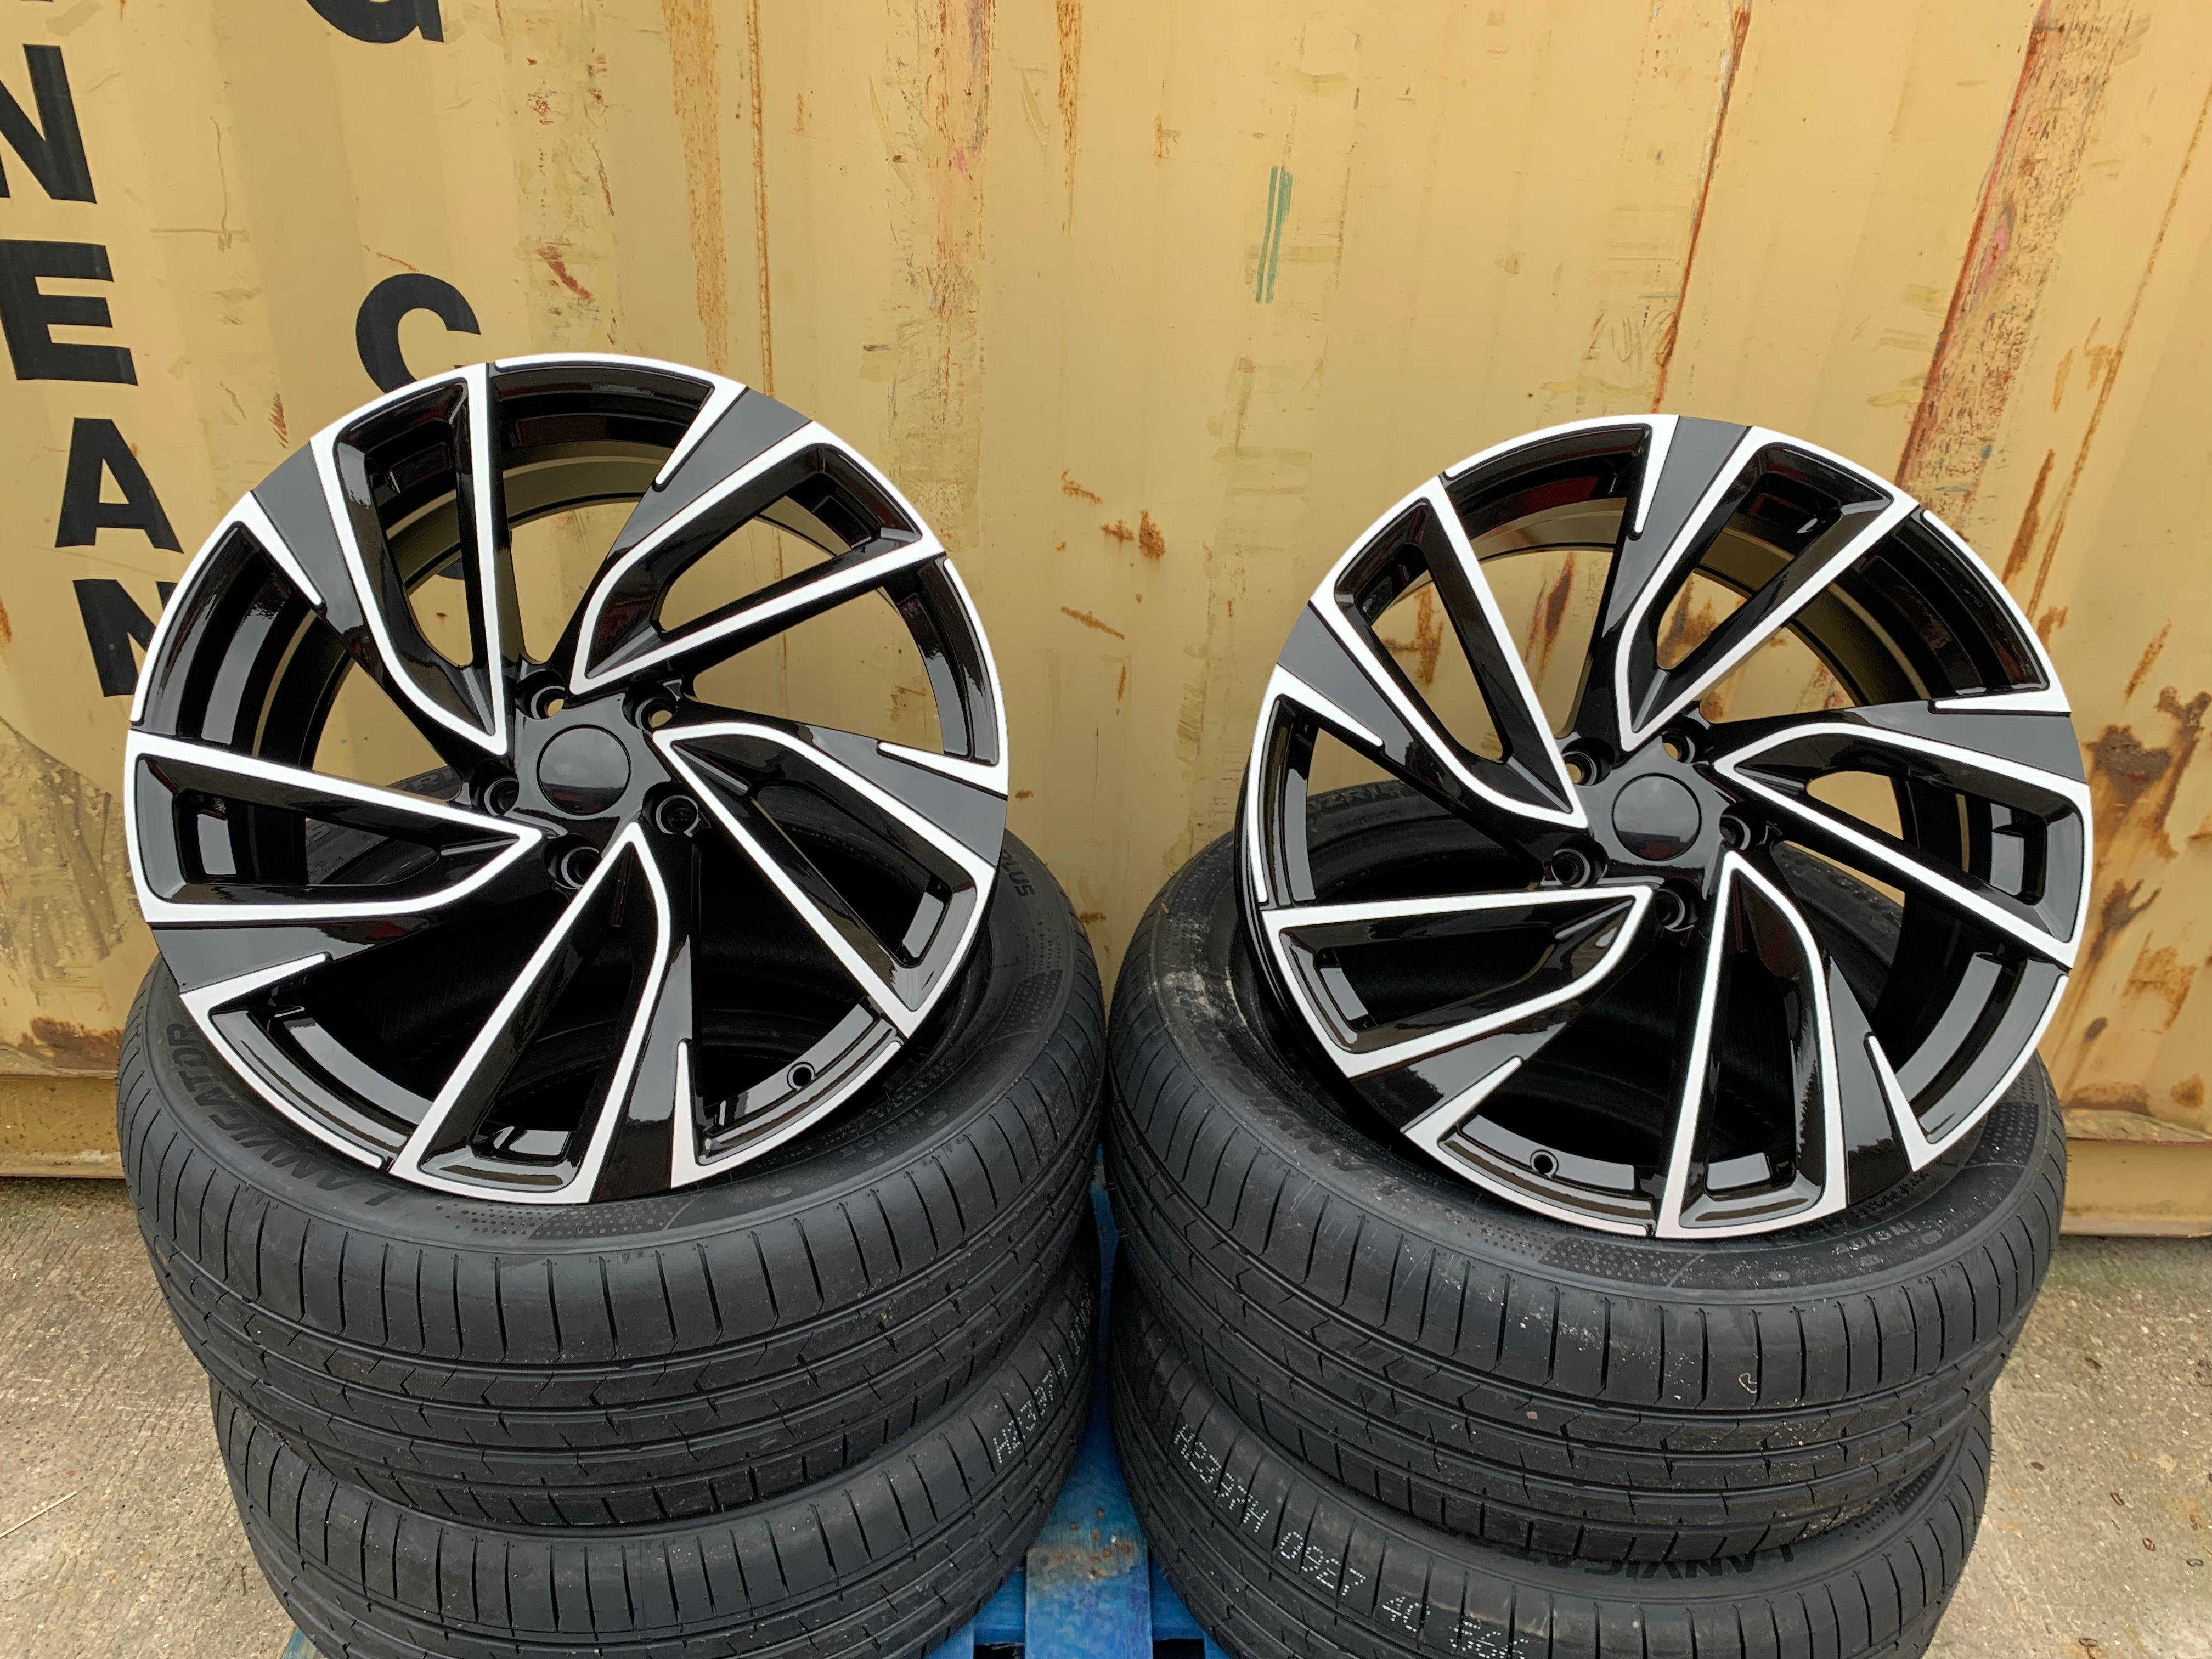 18" Golf MK8 Adelaide style Twist Gti style wheels Black Polished 5x112 fits Volkswagen